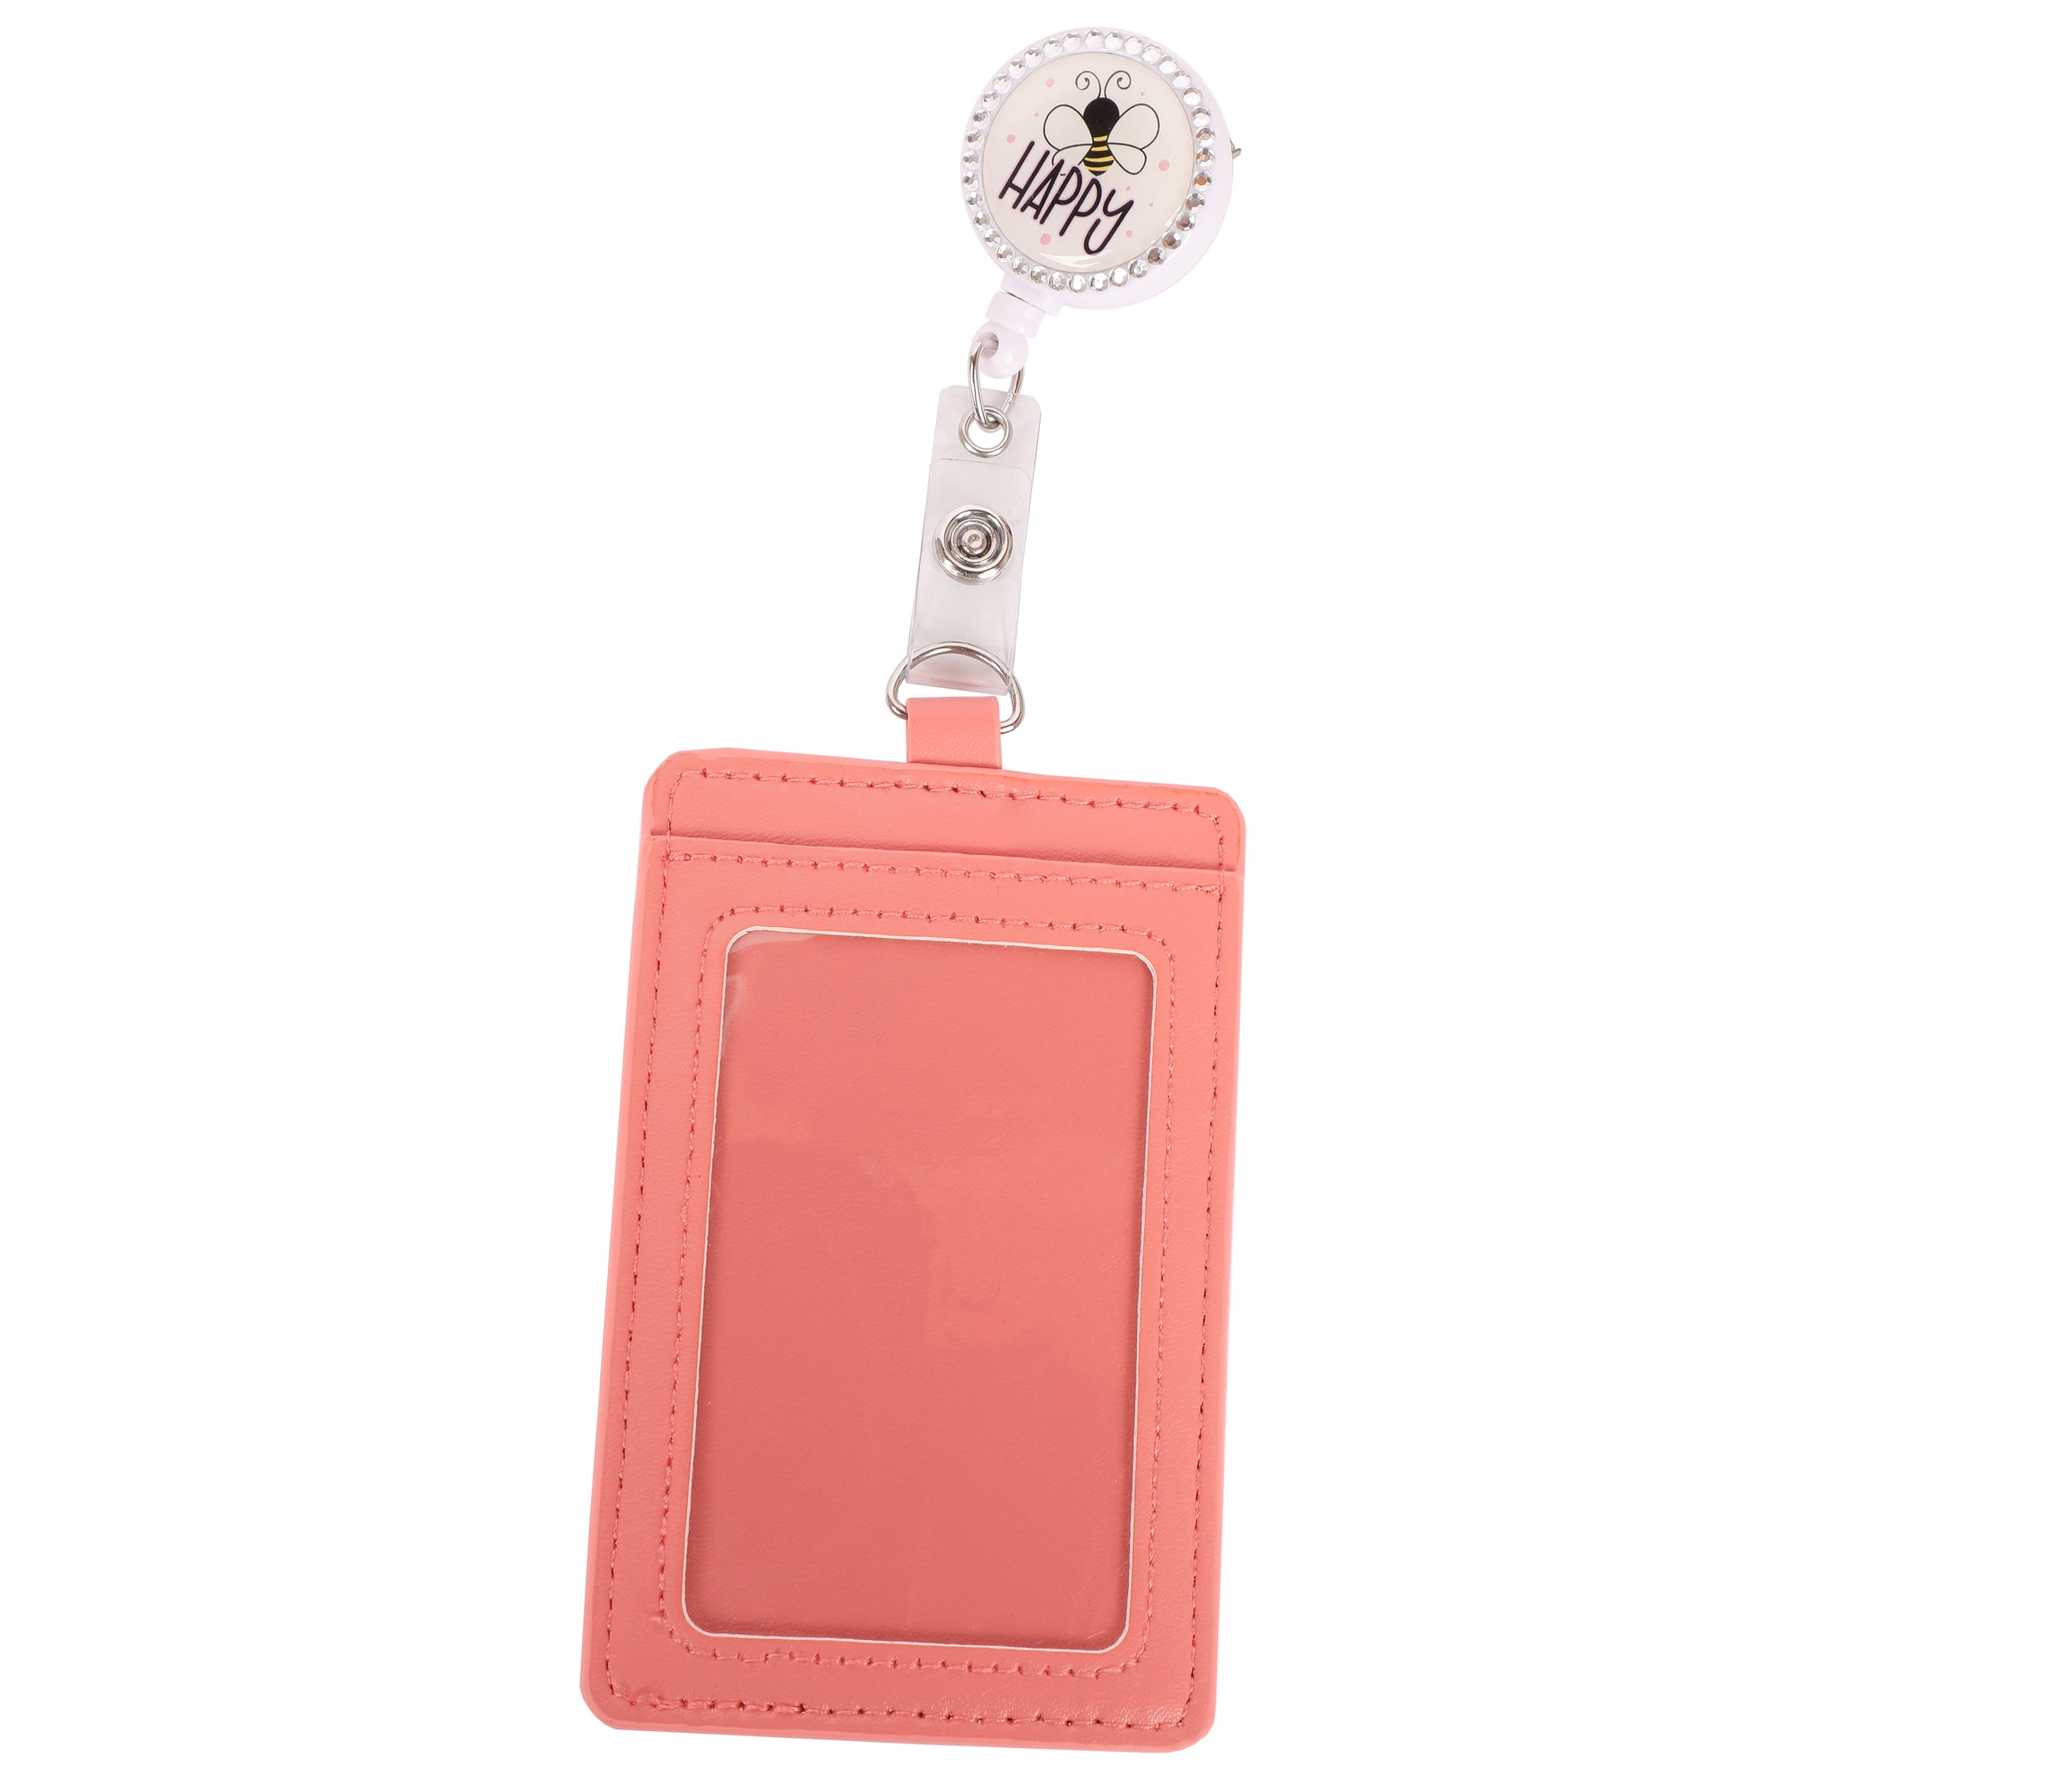 PR Essentials Brand Bee Happy Badge Reel with Coordinating ID Holder Pocket